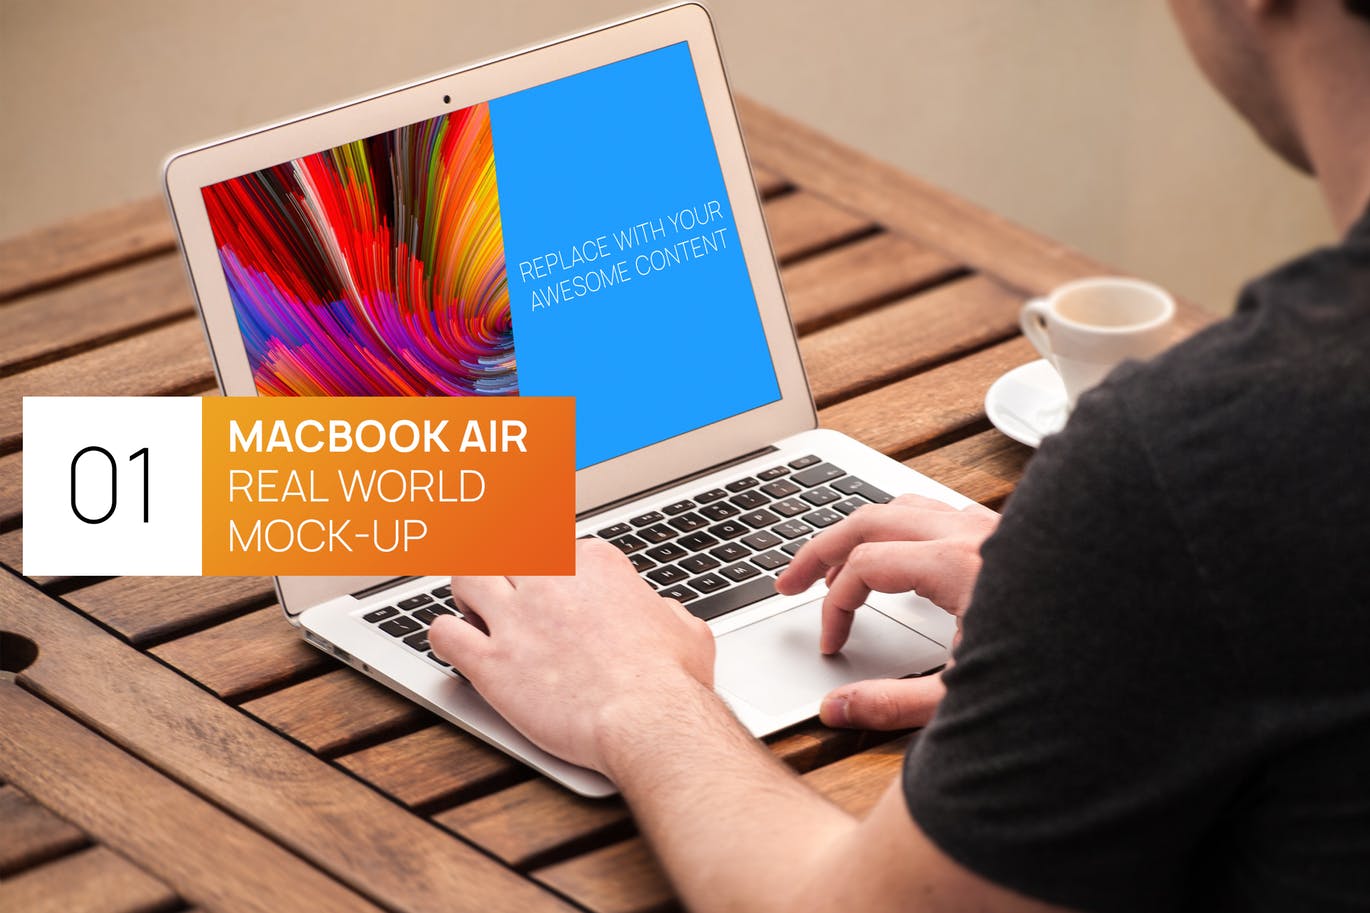 Macbook Air实景使用场景蚂蚁素材精选样机模板v1 Person Using MacBook Air Real World Photo Mock-up插图